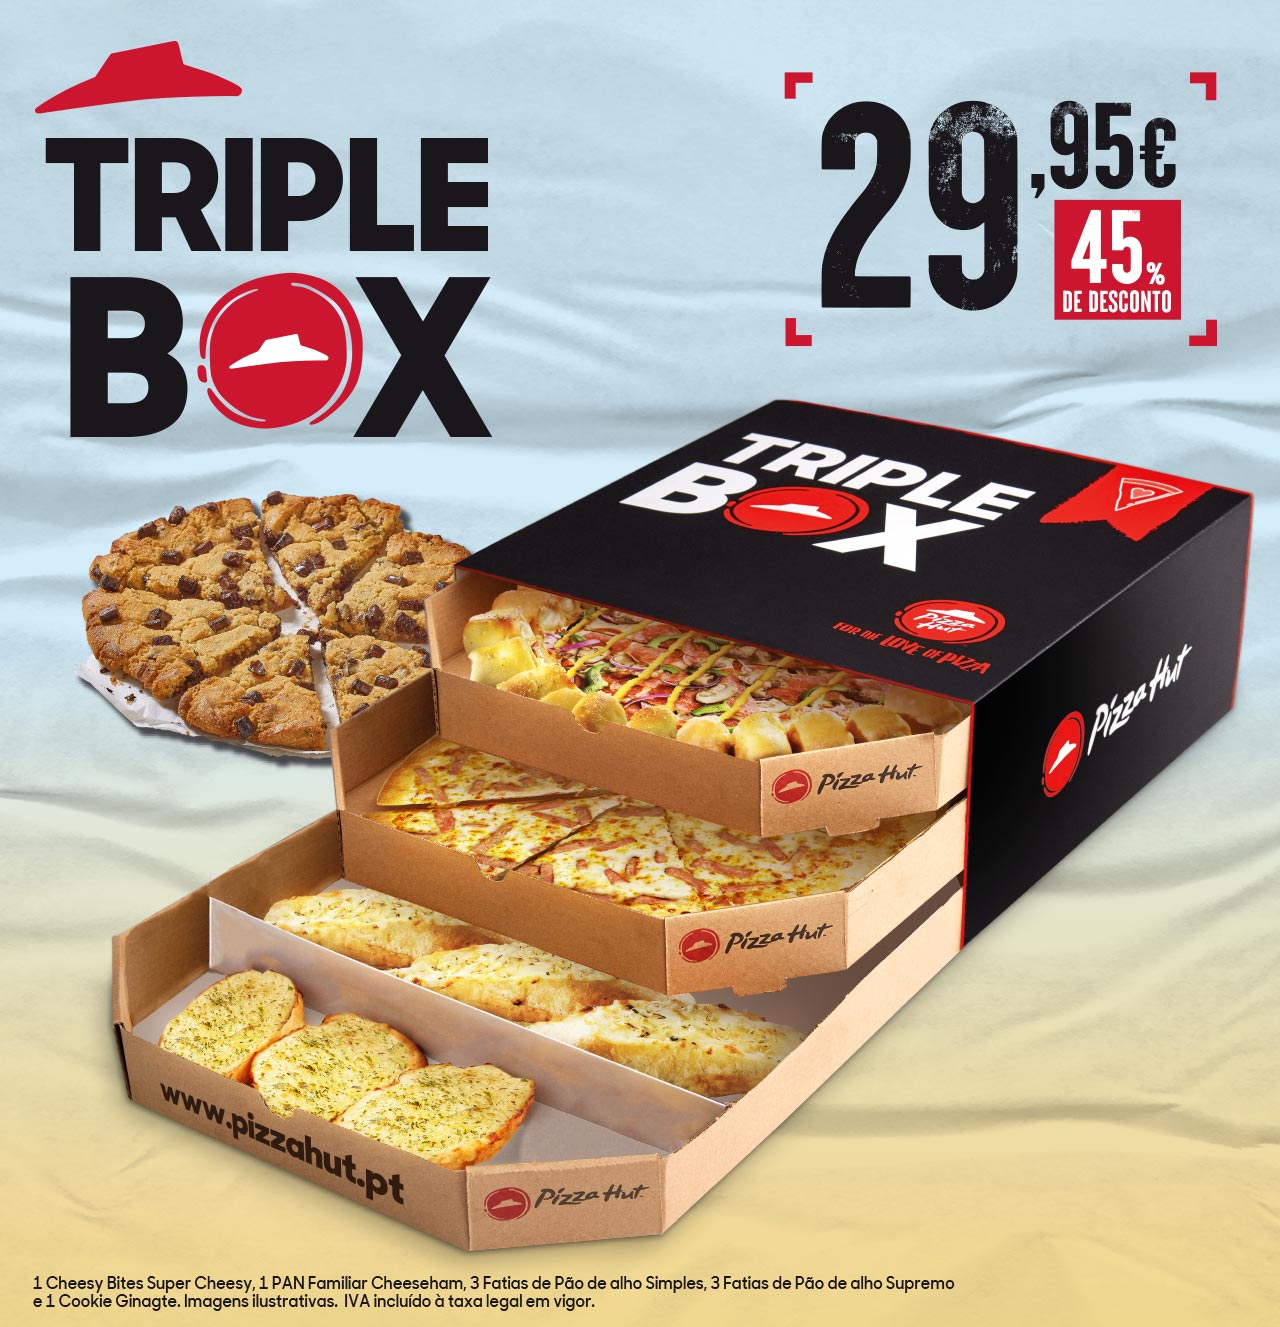 TRIPLE BOX - Entrega ao Domicílio e Take Away. Pizza Hut